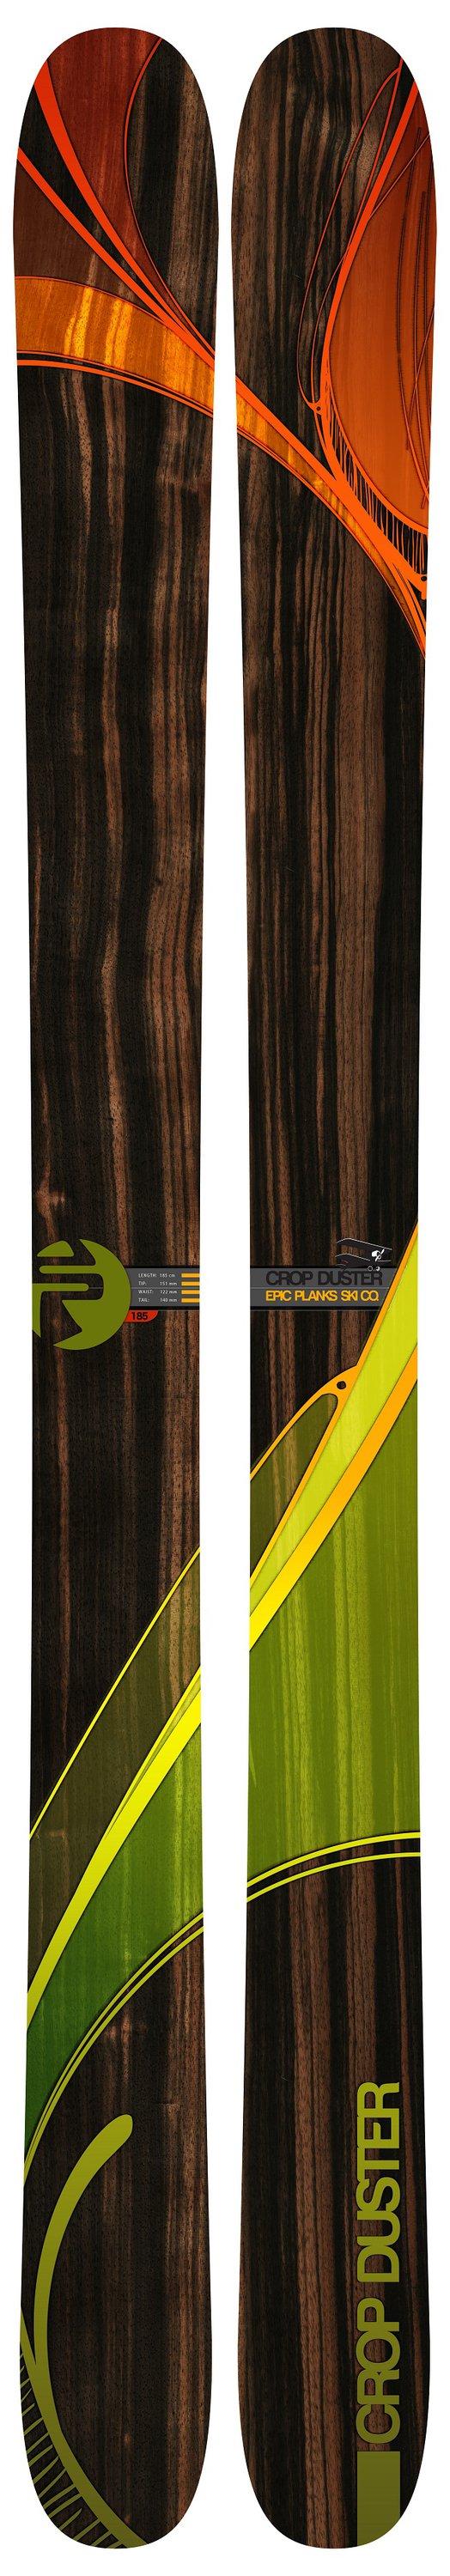 Epic Planks Crop Duster Topsheet